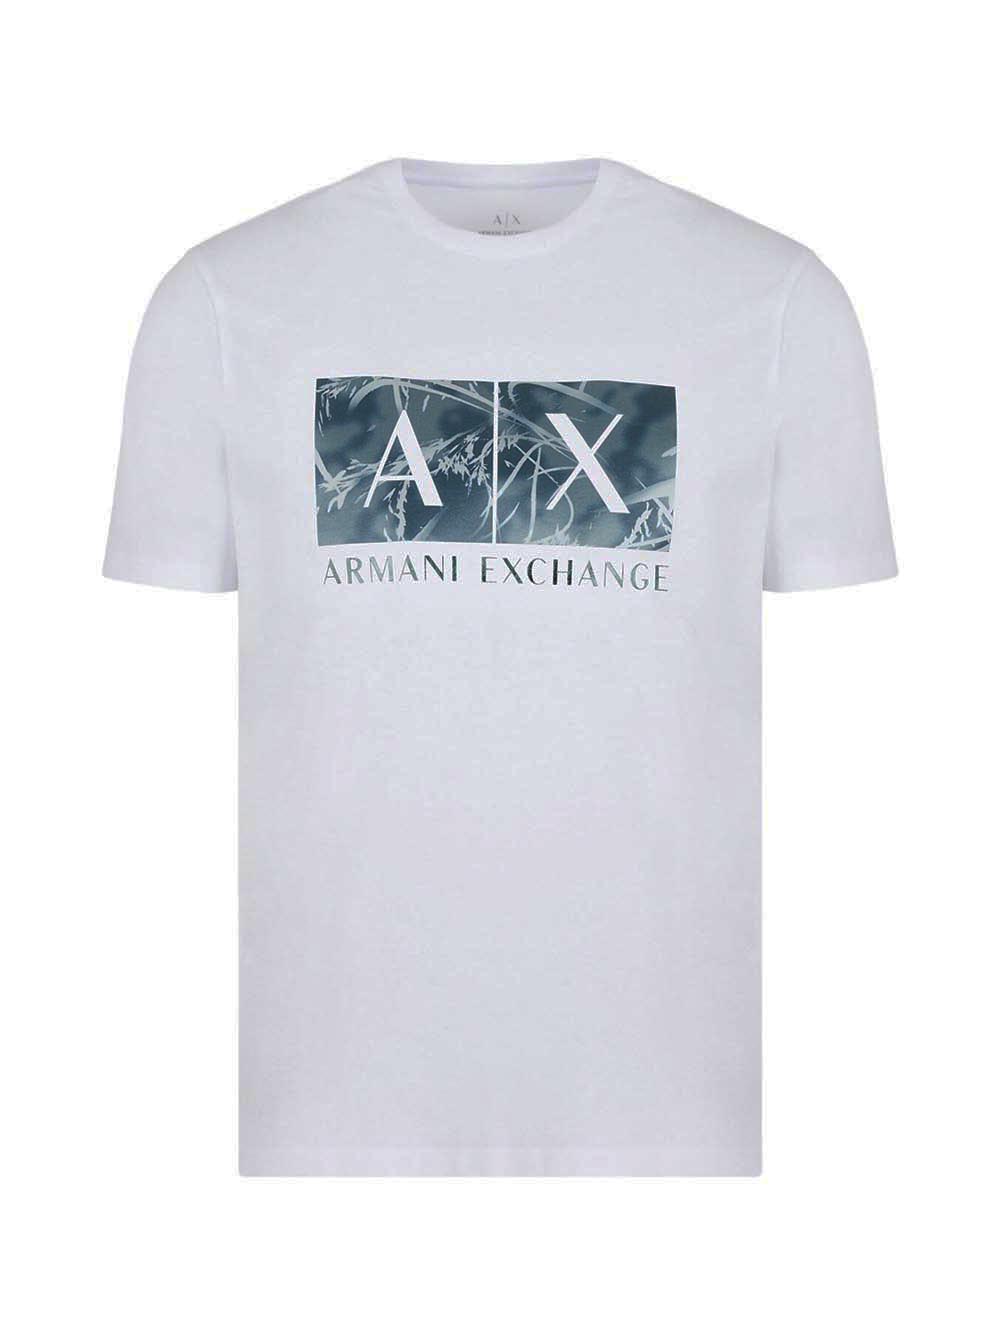 ARMANI EXCHANGE T-shirt Uomo Bianco/verde